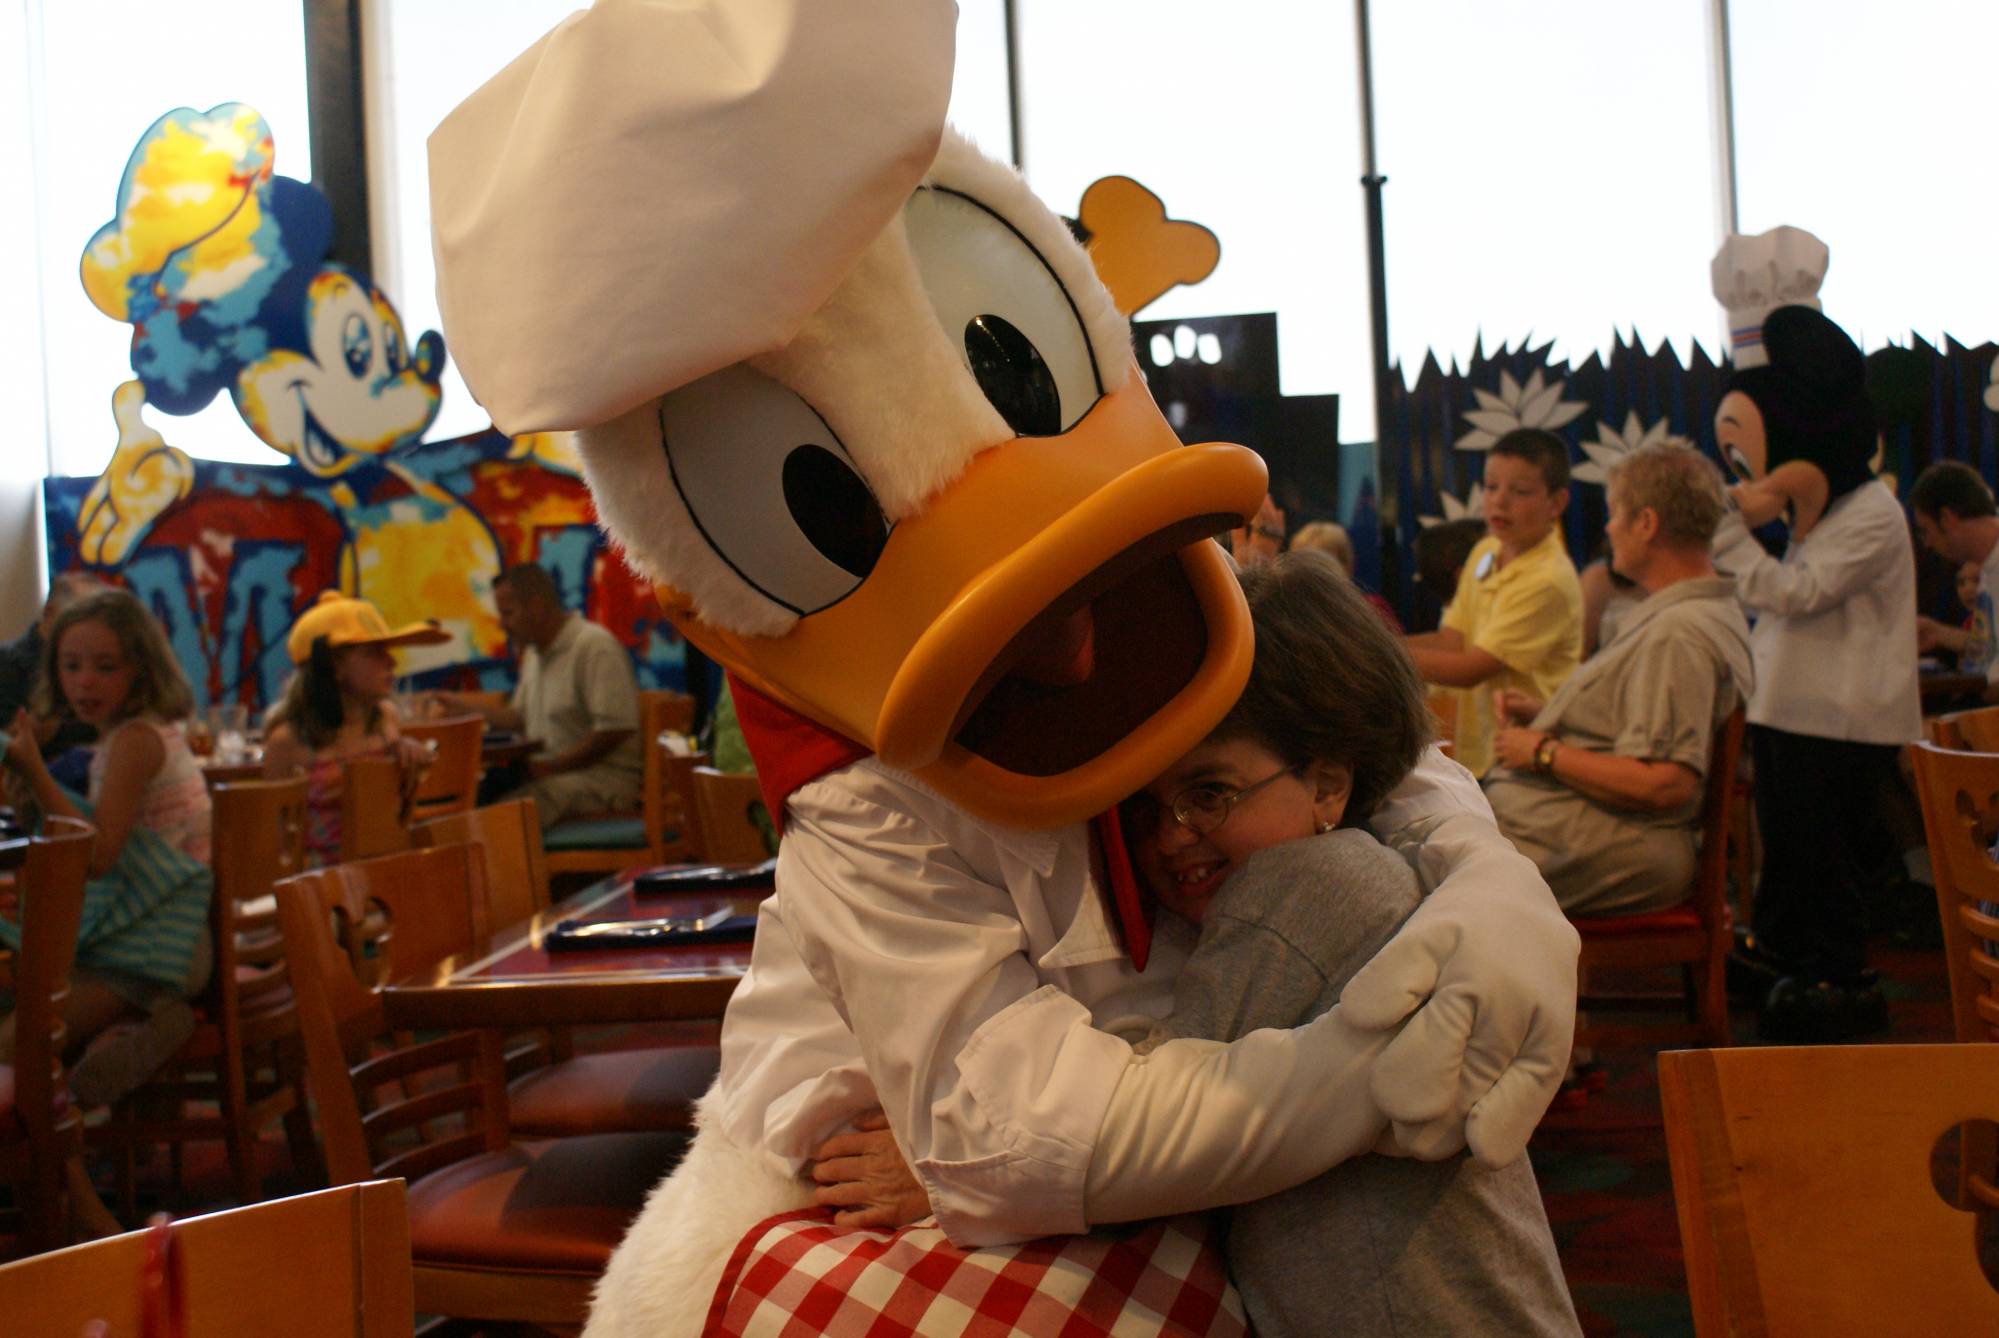 Hugging Donald at Chef Mickey's